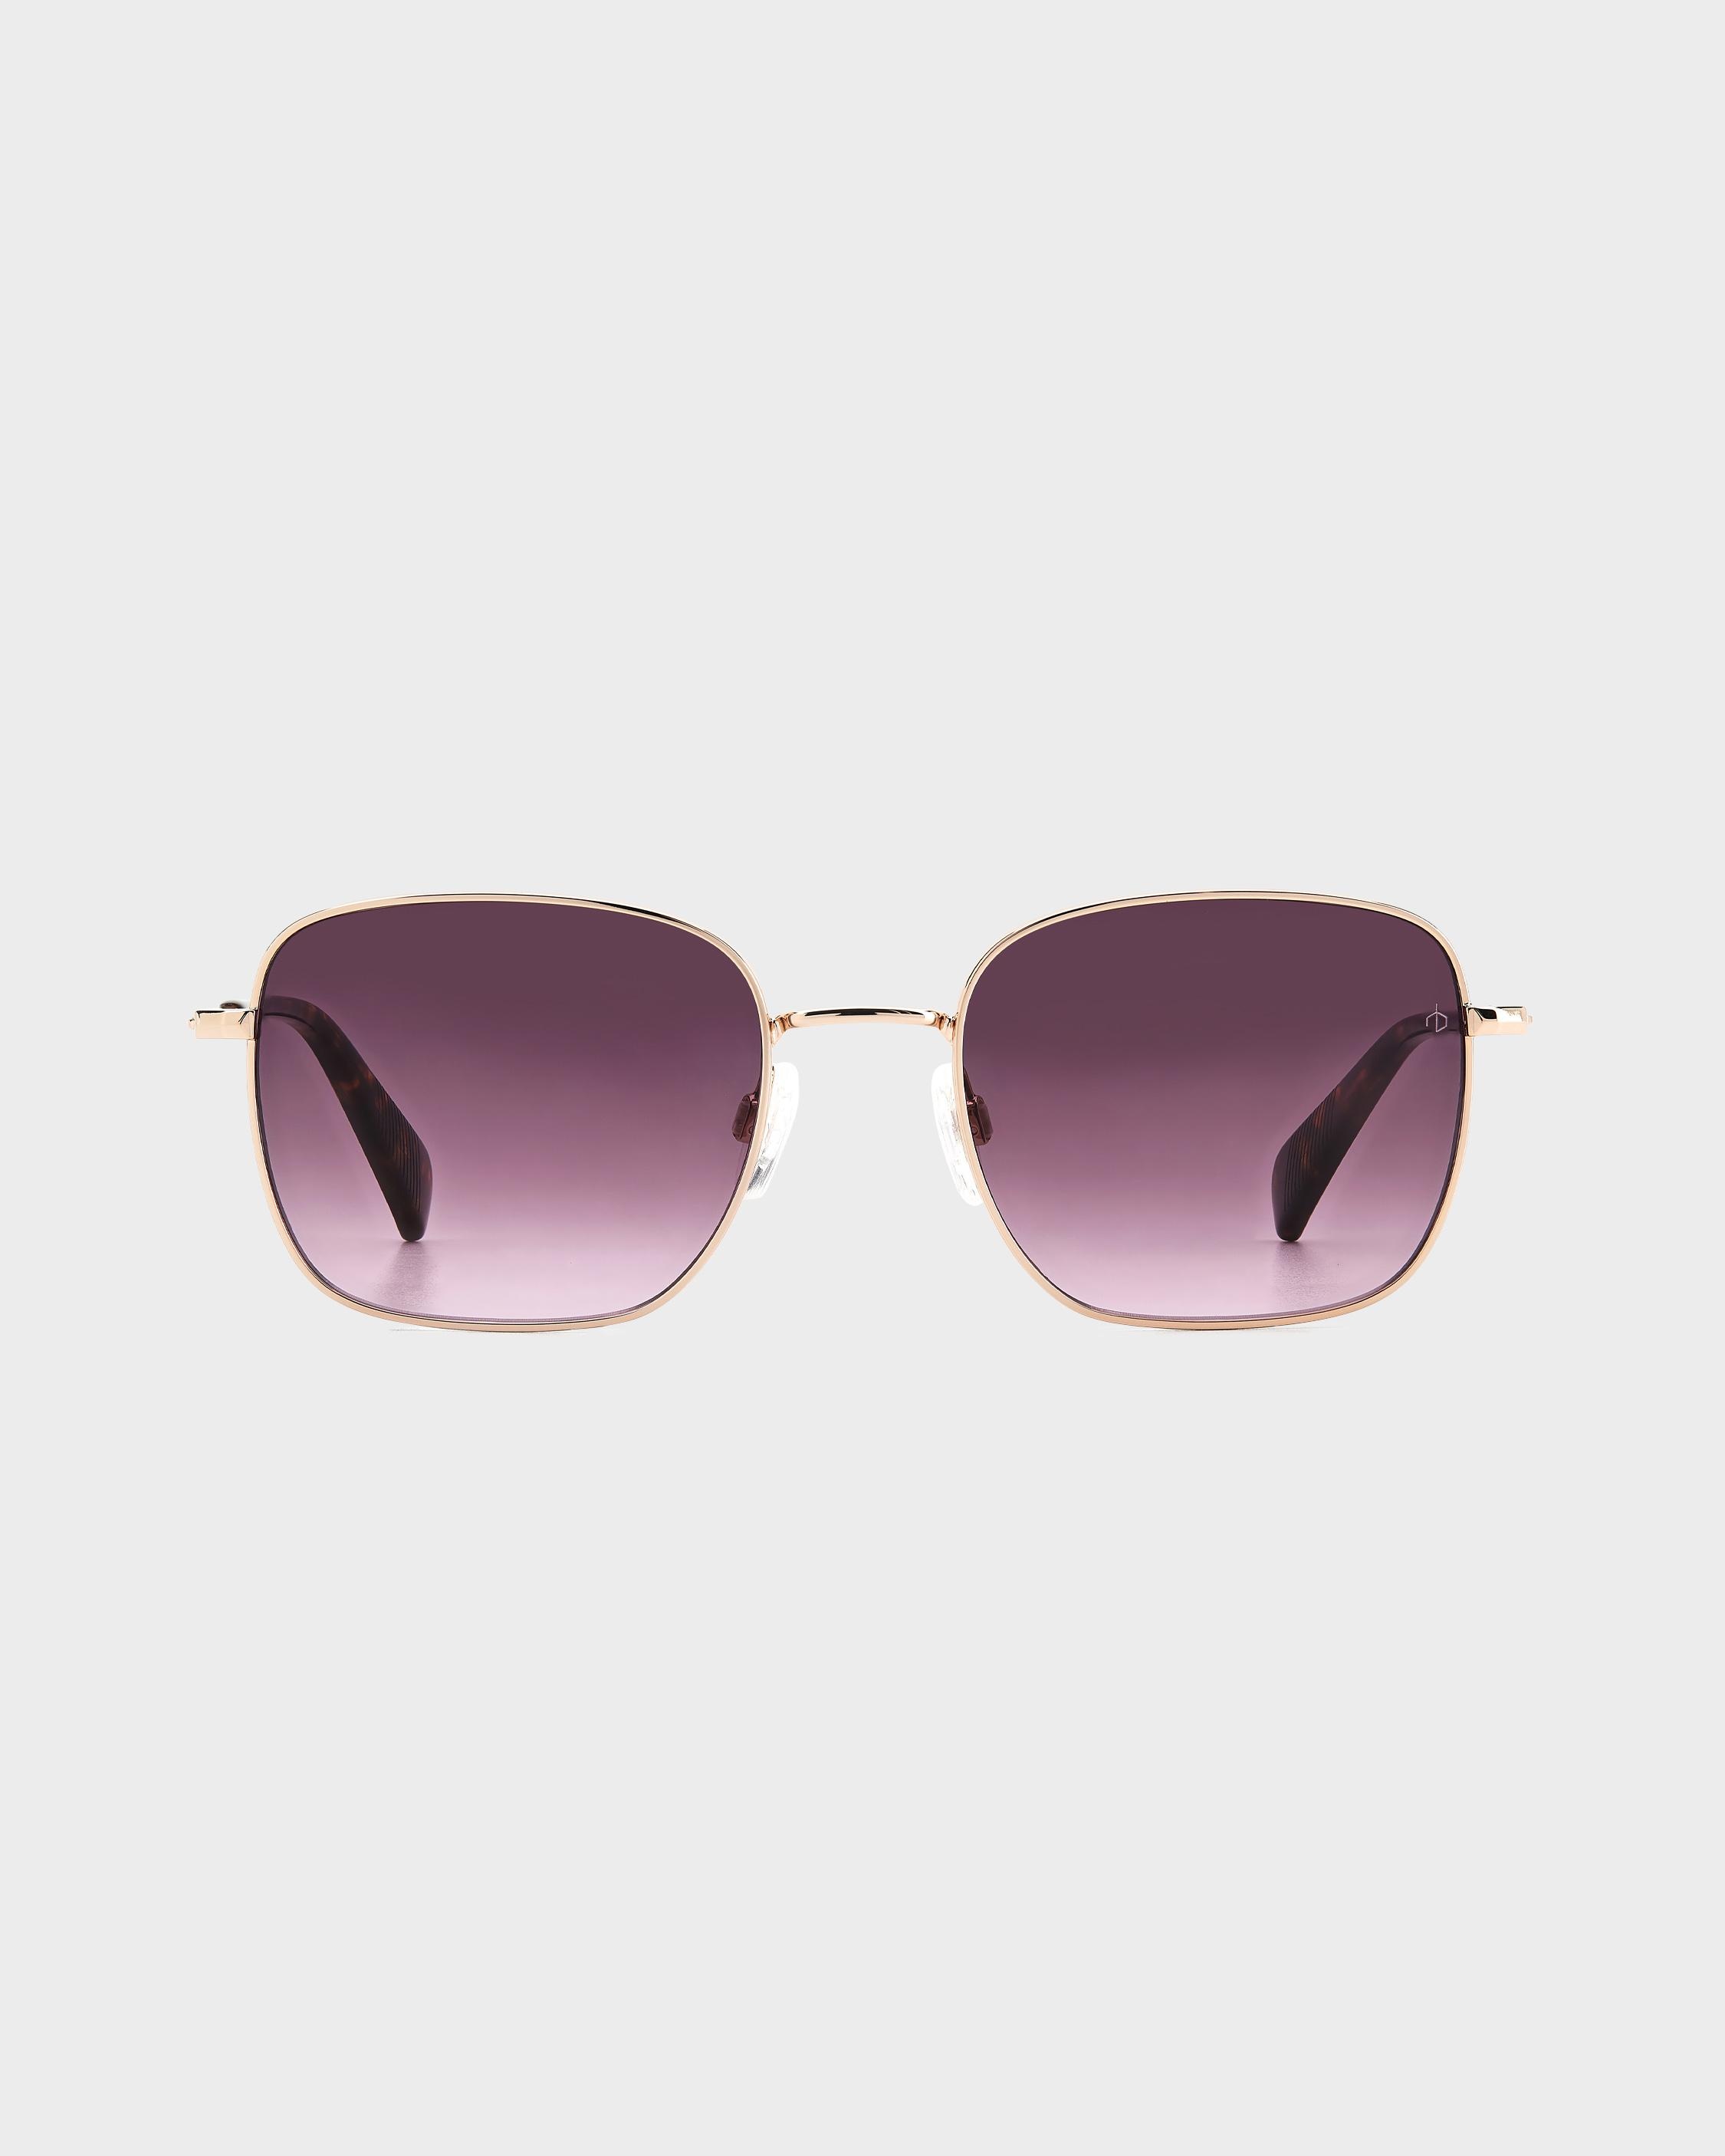 Breton
Square Sunglasses - 2